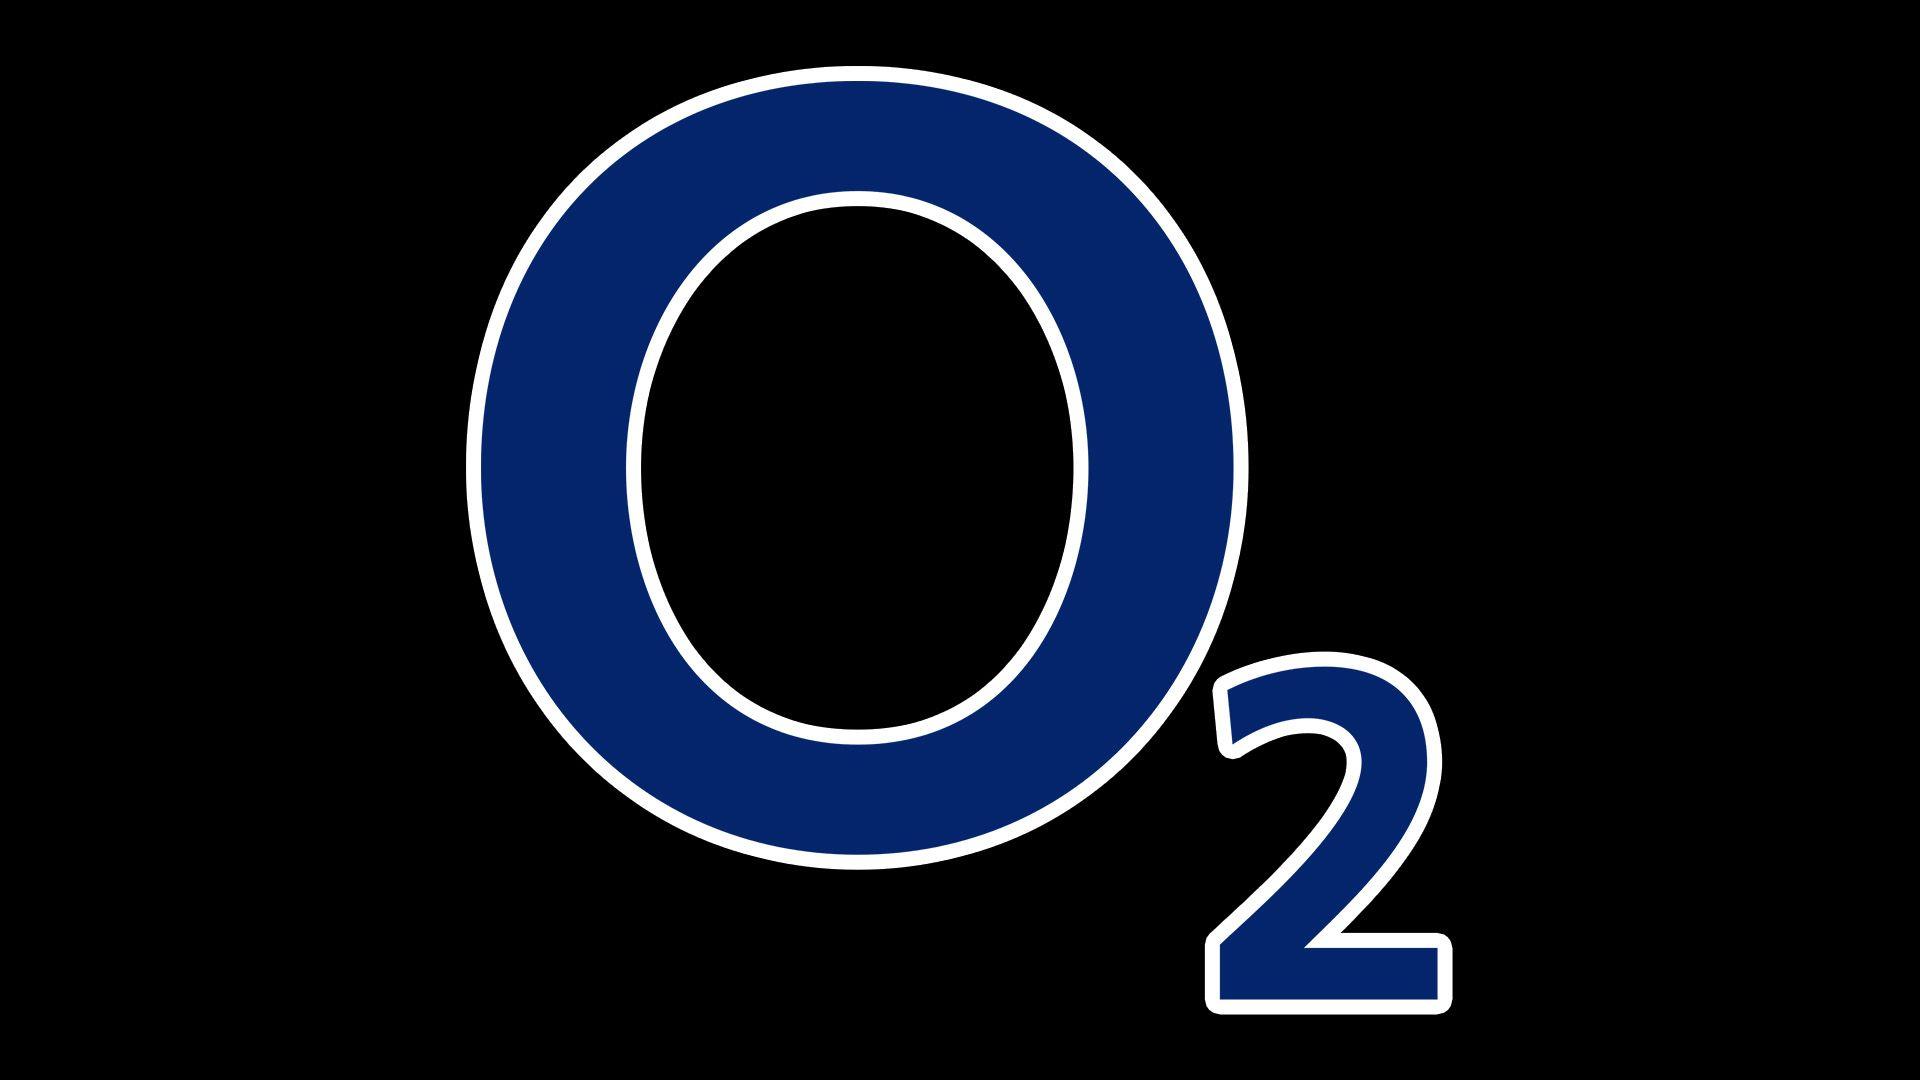 O2 Logo - O2 logo, O2 Symbol, Meaning, History and Evolution